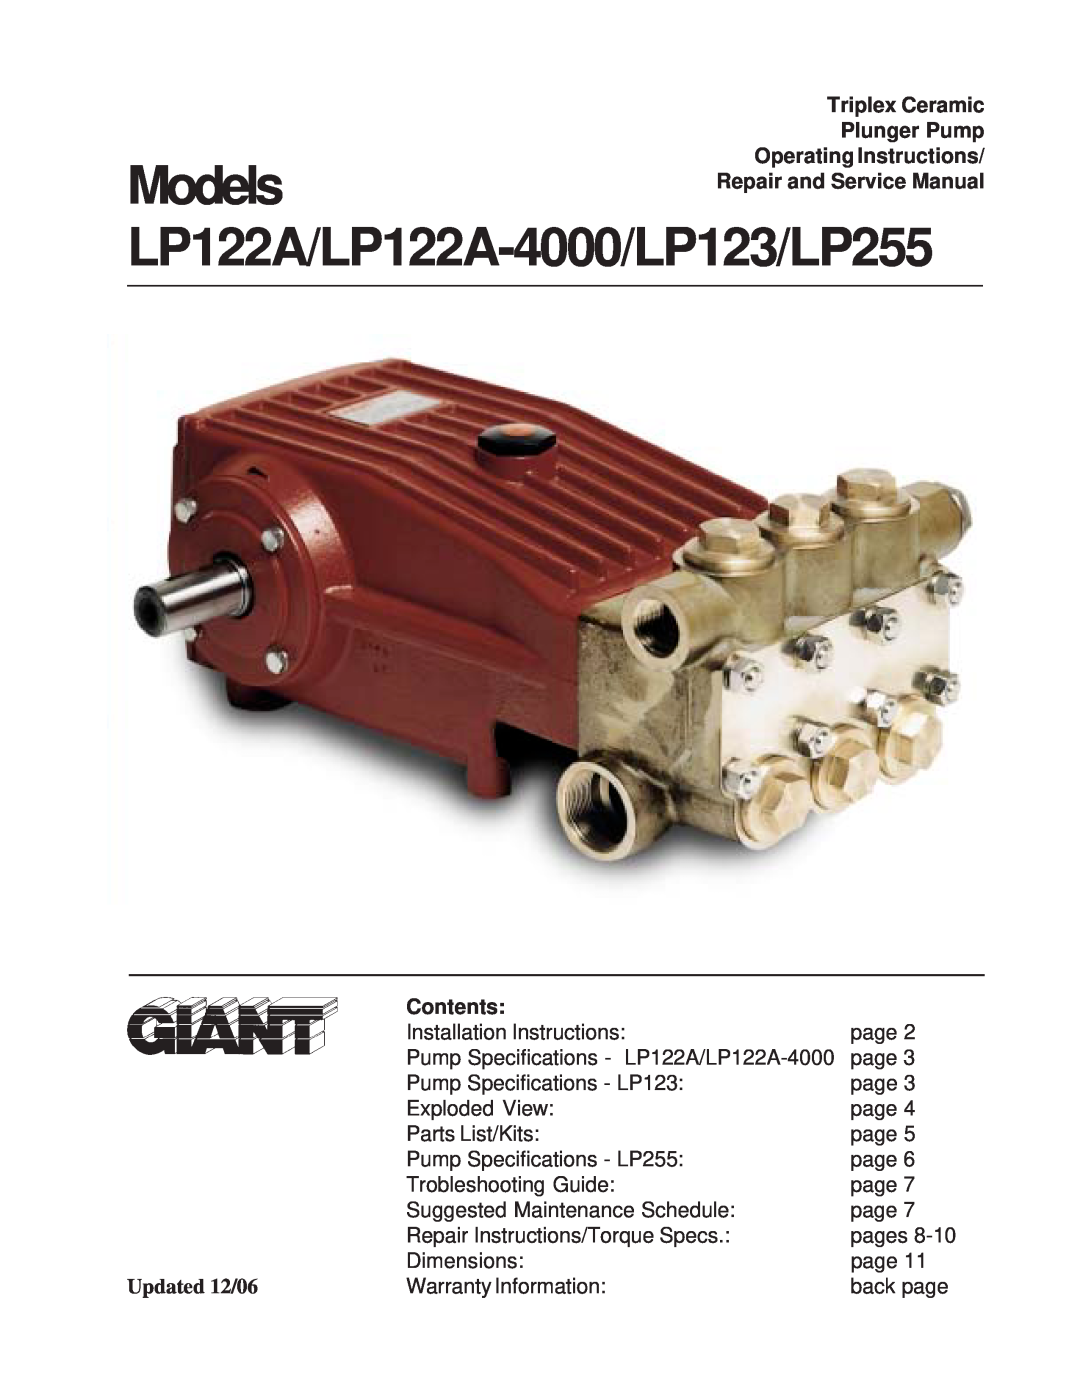 Giant LP122A operating instructions Triplex Ceramic Plunger Pump, Operating Instructions, Contents, Updated 12/06 